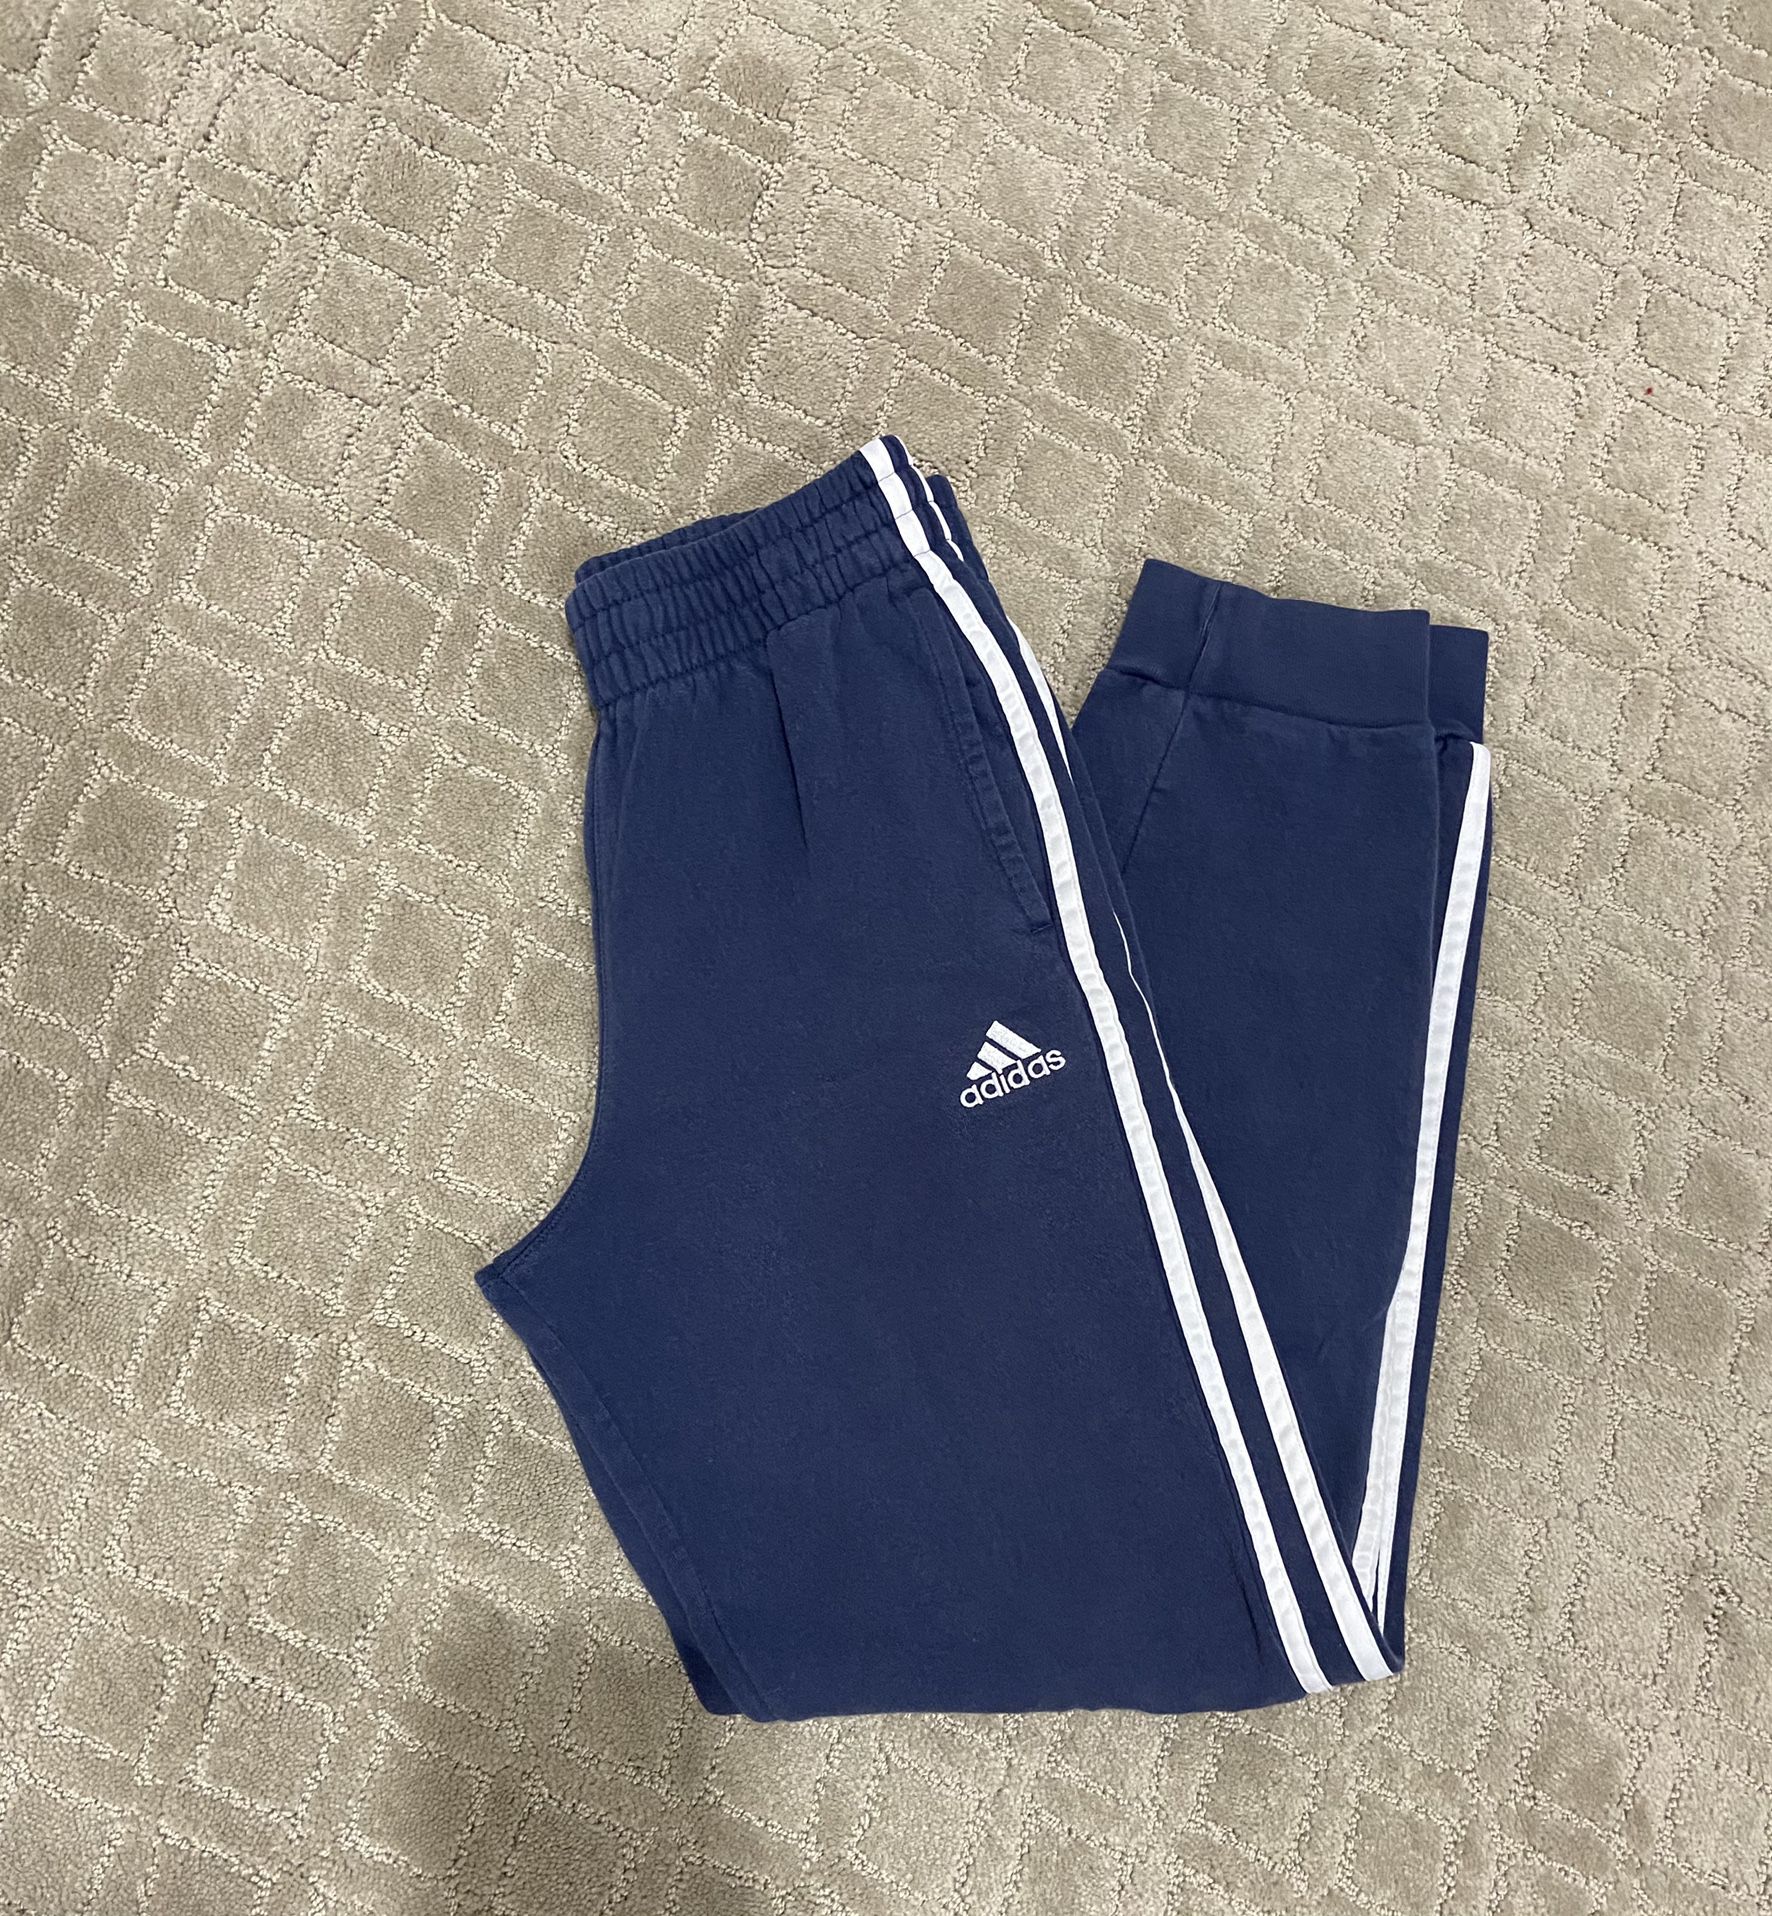 Kids Adidas Sweatpants Size L